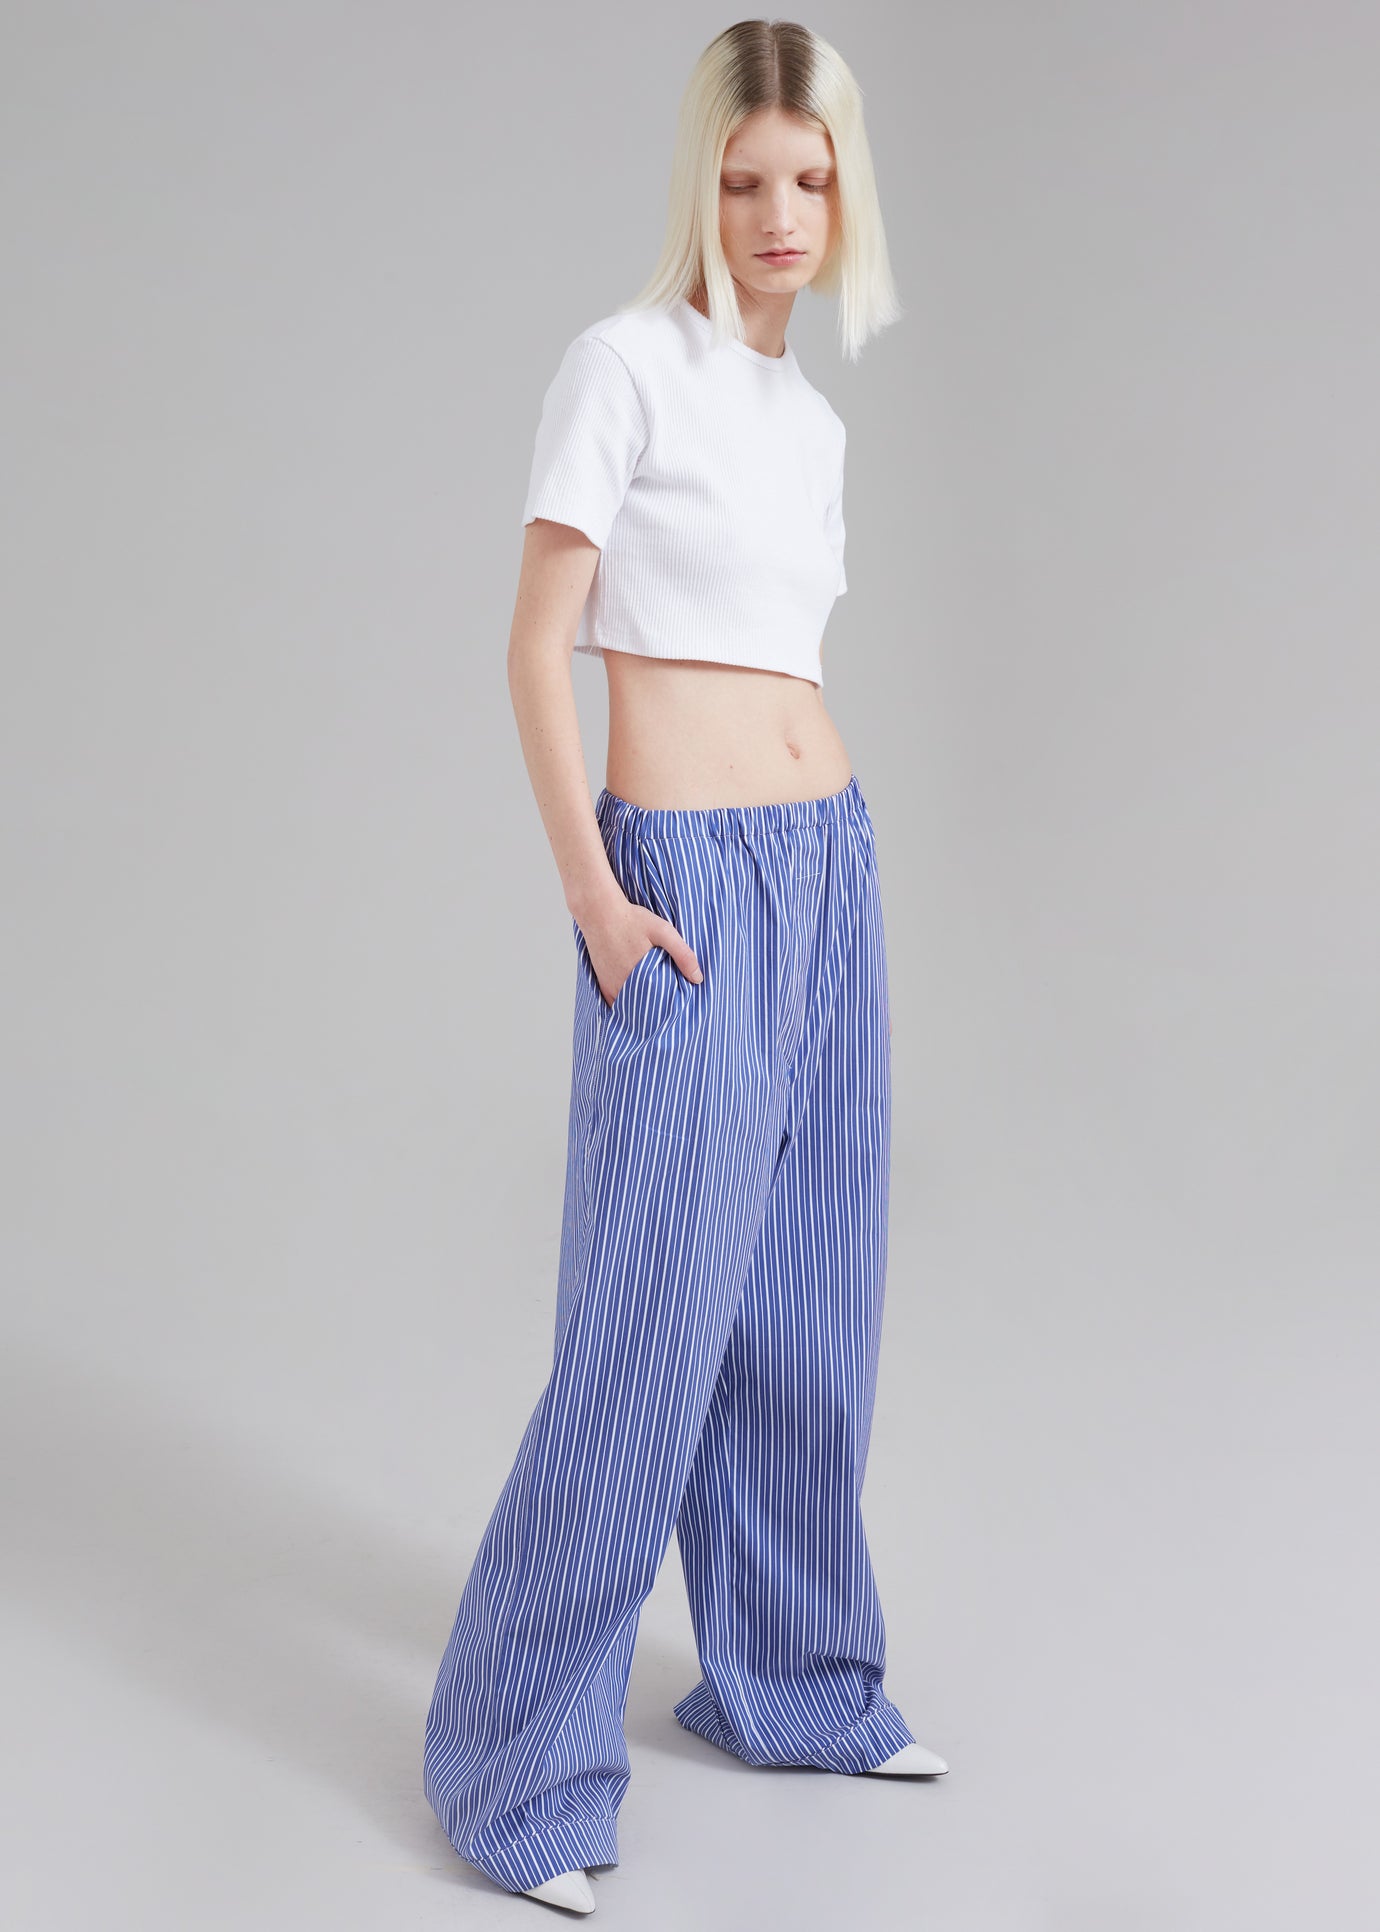 Mirca Elastic Pants - Blue Multi Stripe - 1